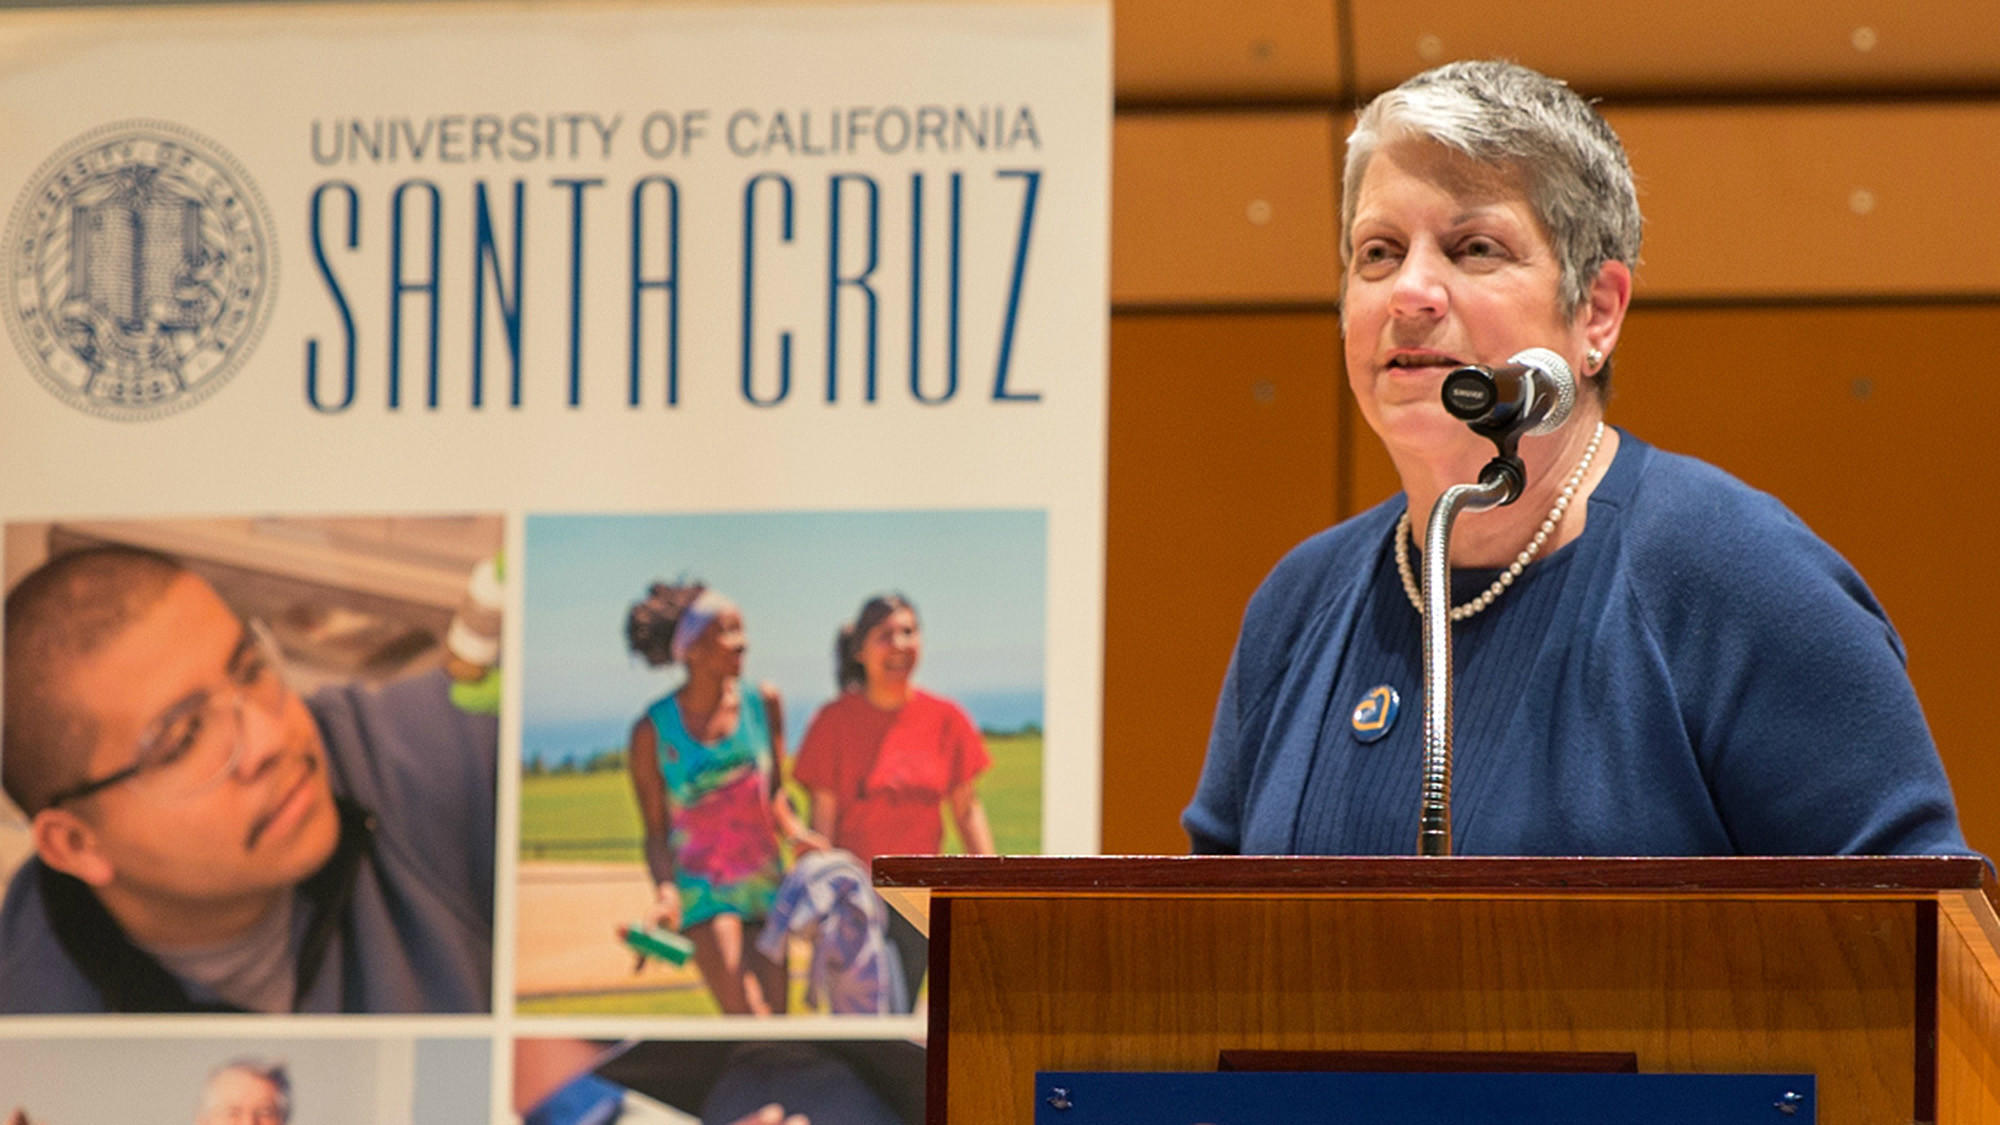 UC Santa Cruz has offerings far beyond hippies and banana 